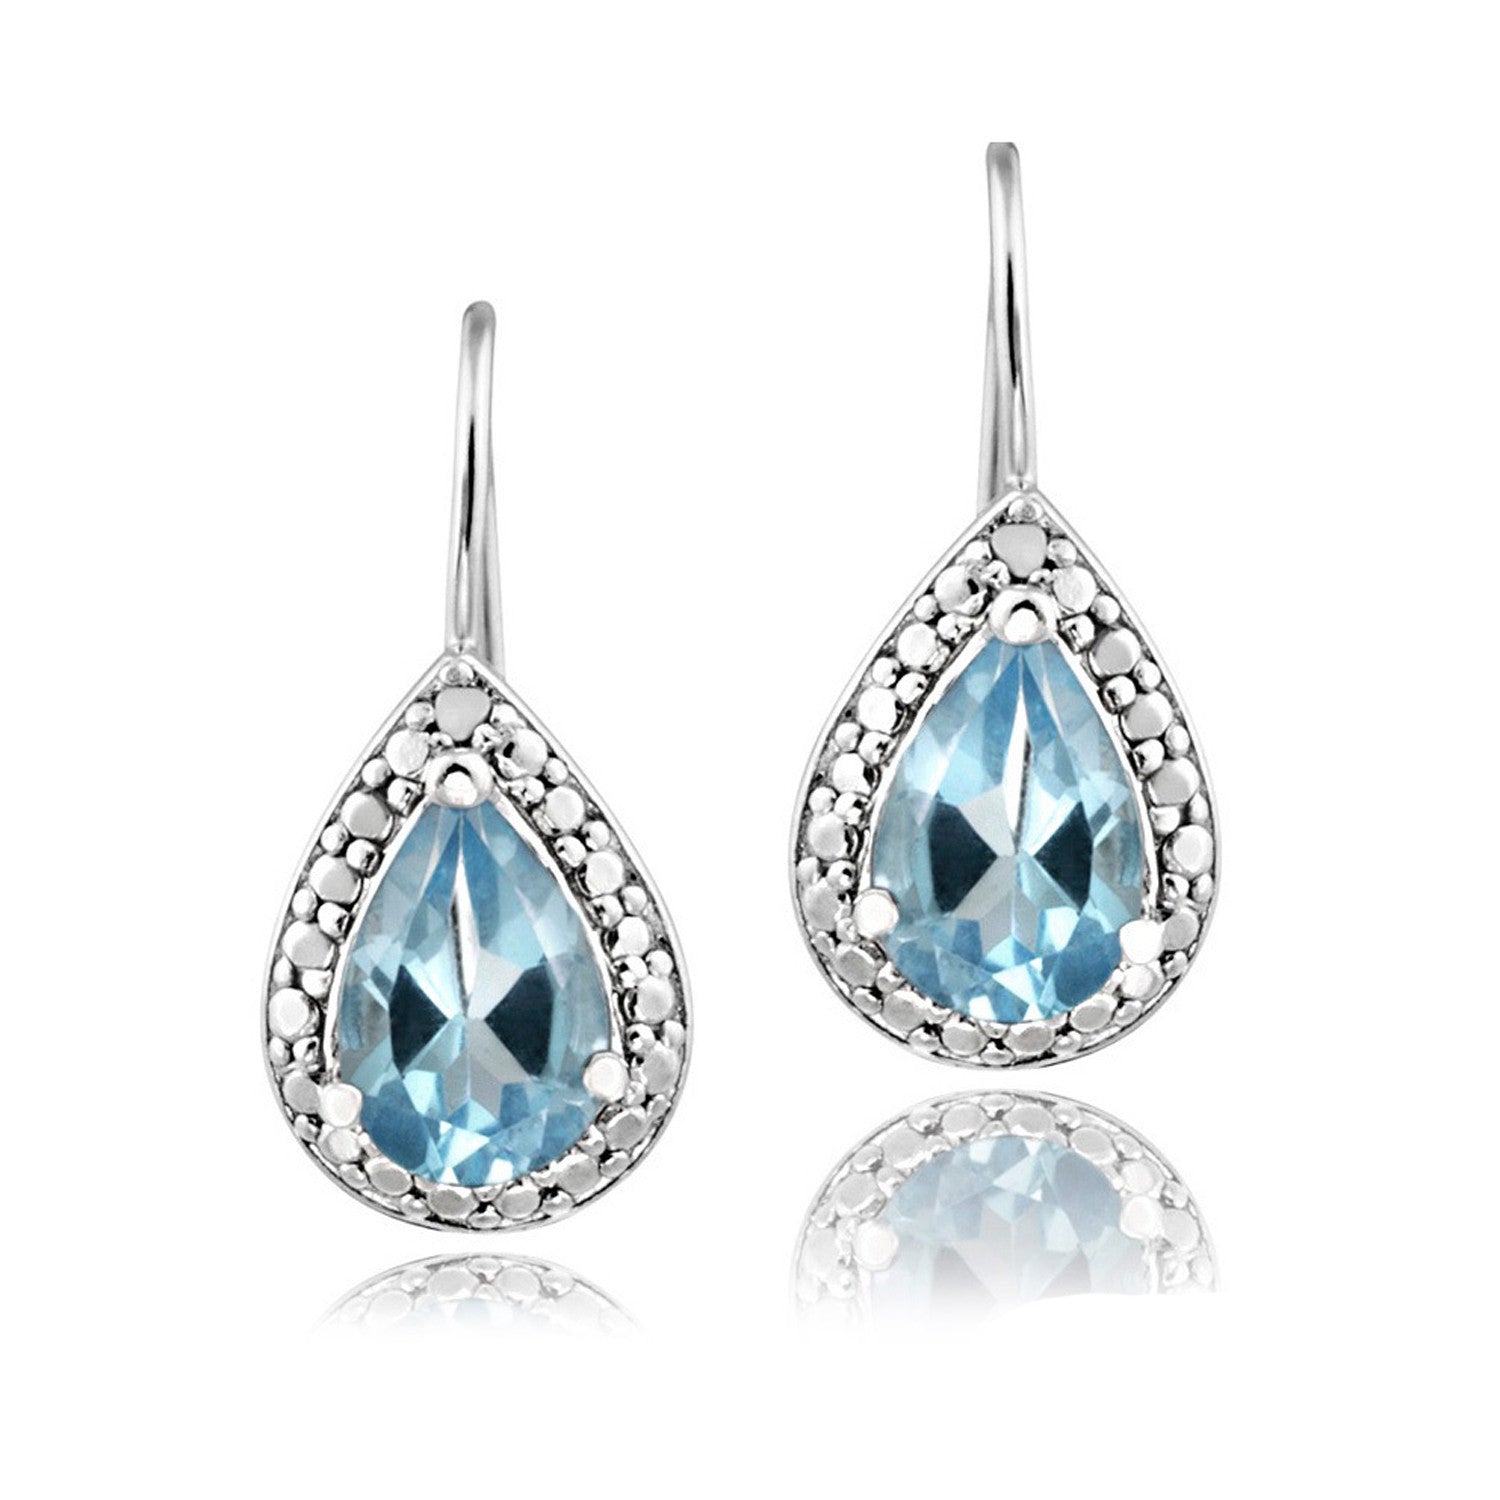 Sterling Silver Diamond & Gemstone Accent Leverback Dangle Earrings - Blue Topaz